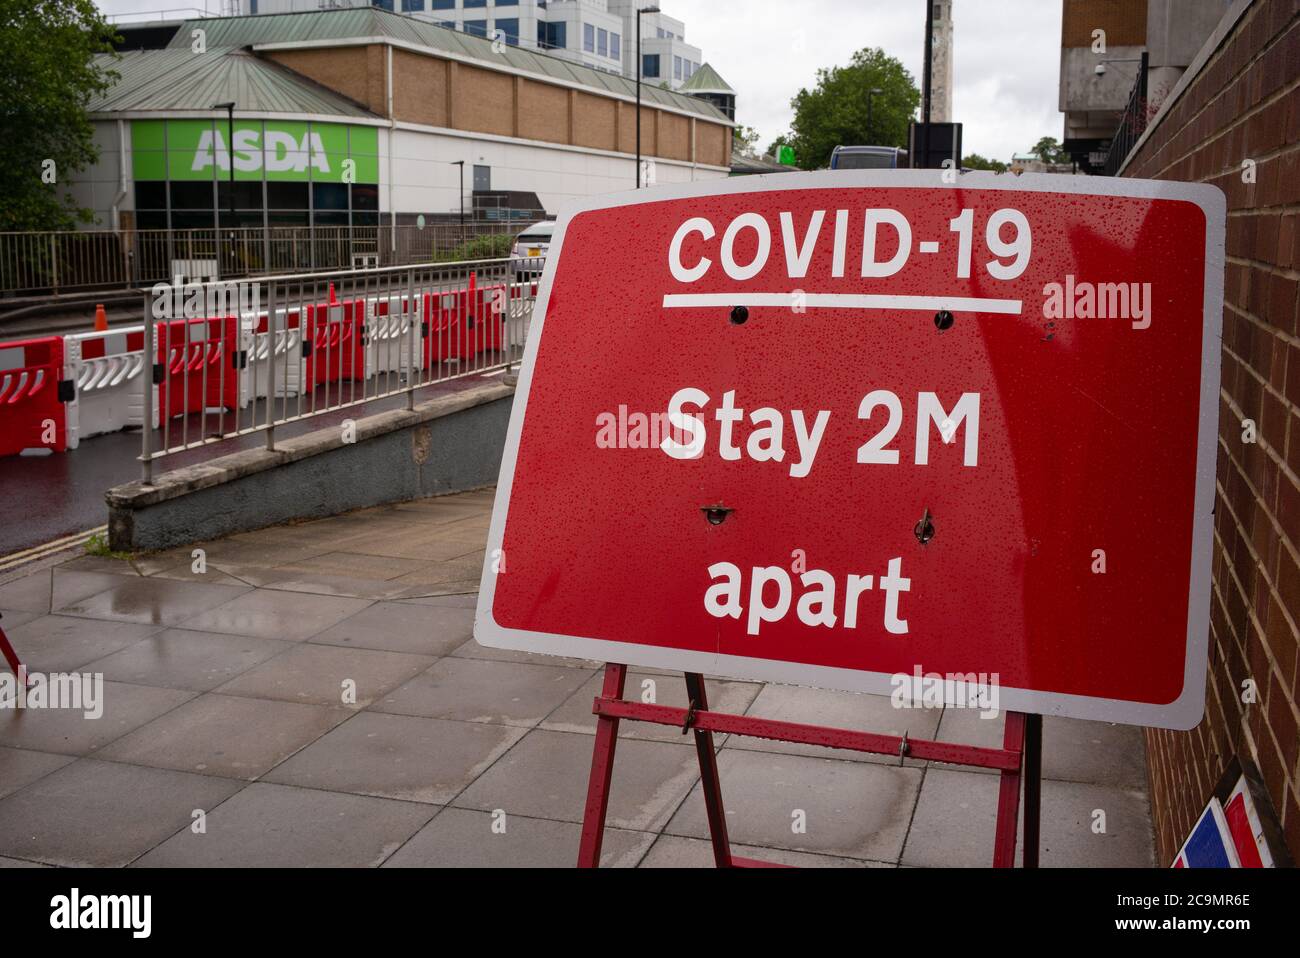 Covid-19 virus stay 2m apart street sign outside Asda in Southampton city England. Stock Photo